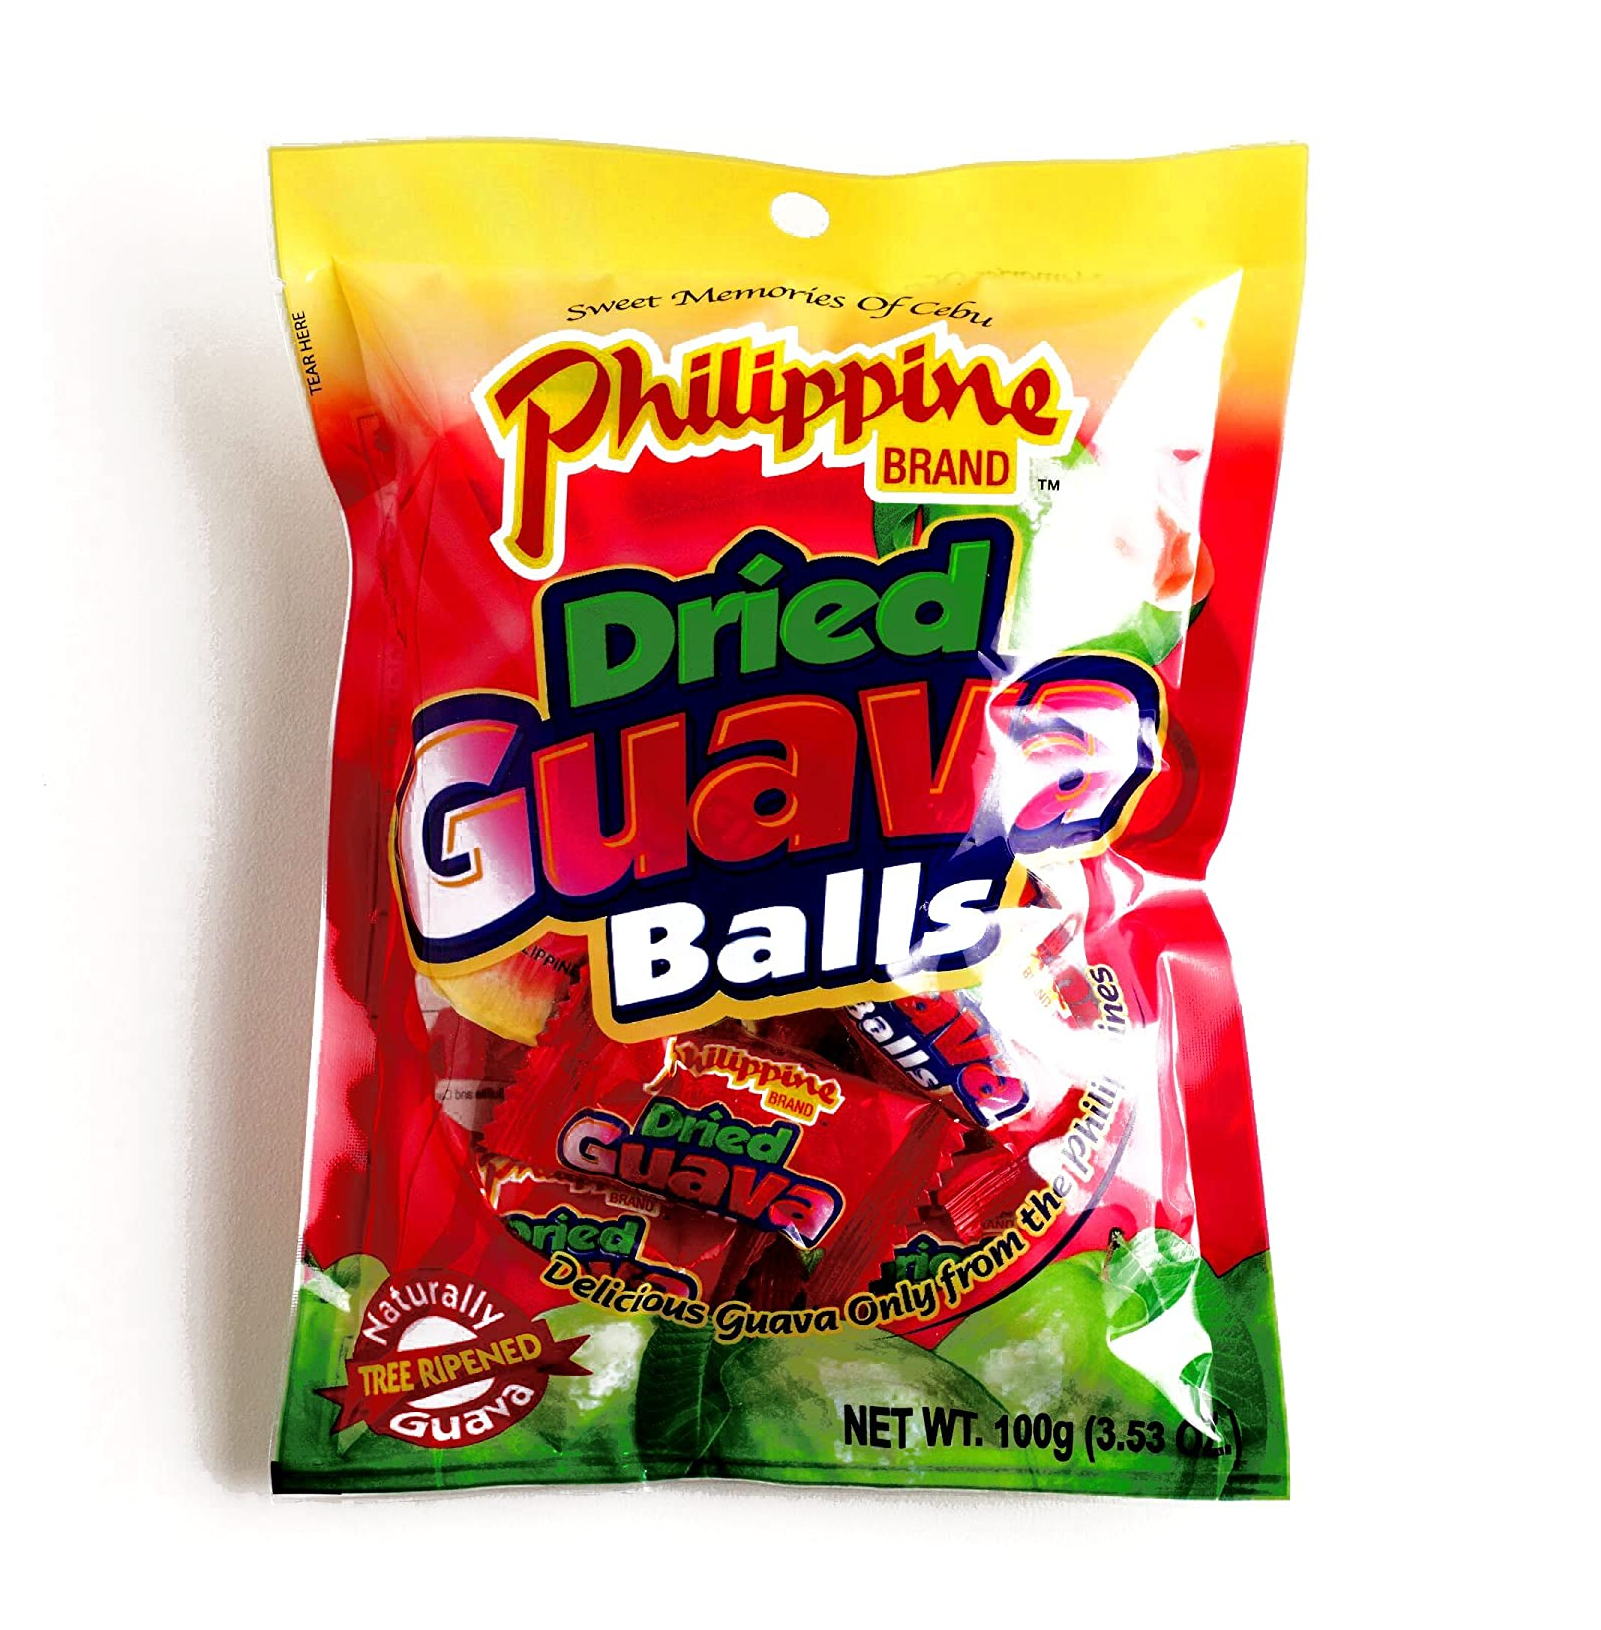 Philippine Brand Dried guava balls